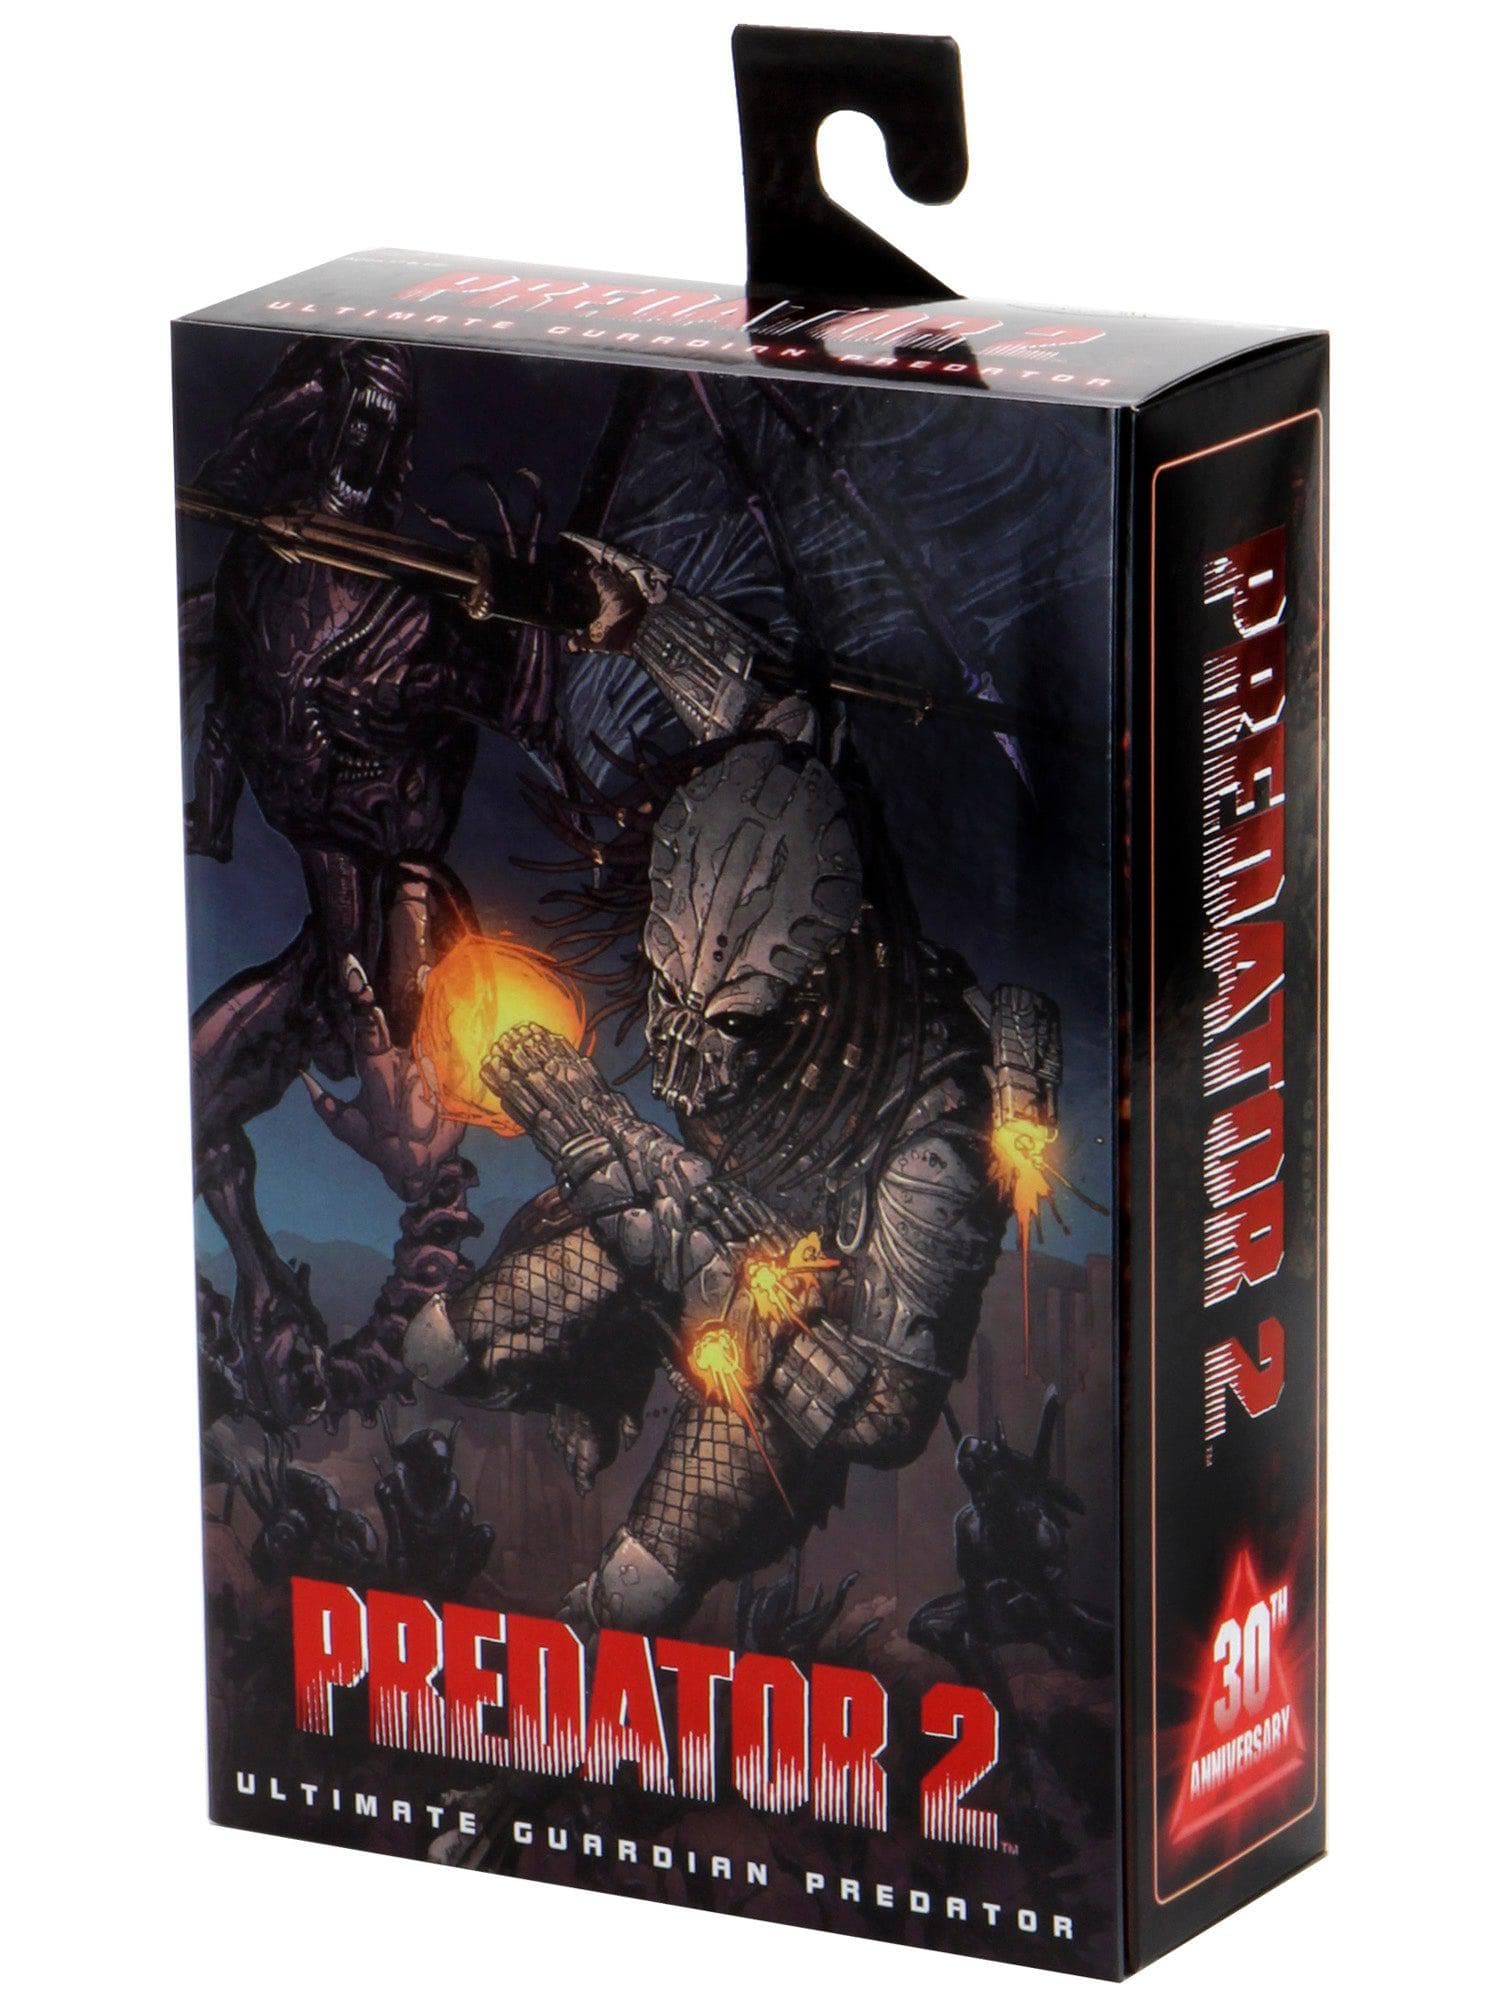 NECA - Predator 2 - 7" Scale Action Figure - Ultimate Guardian Predator - costumes.com